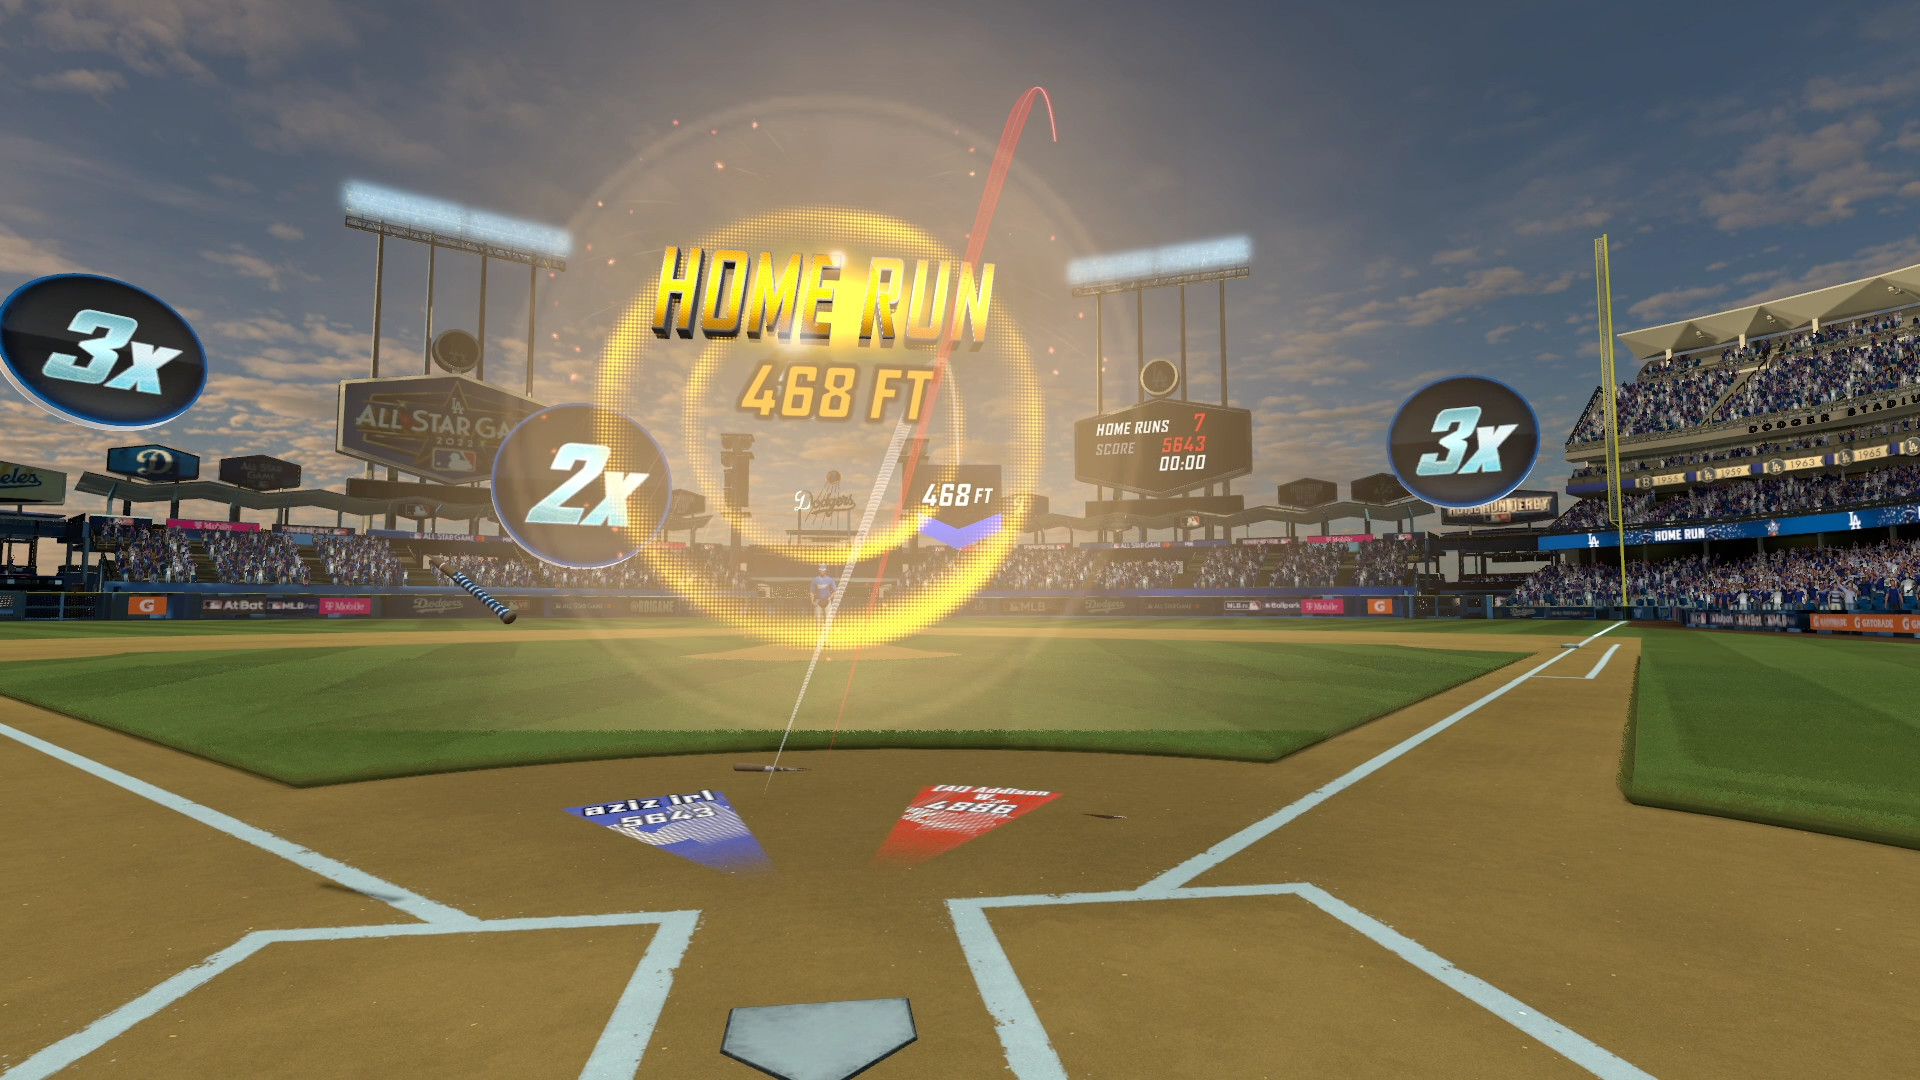 Save 50% on MLB Home Run Derby VR on Steam